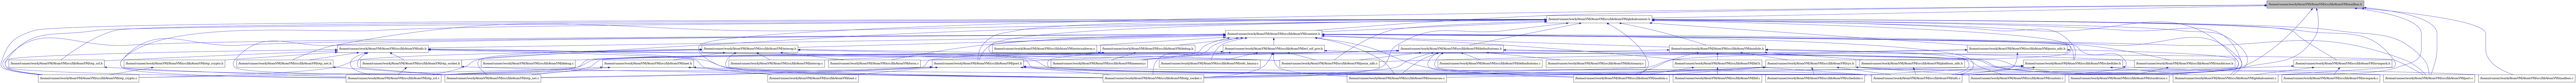 digraph {
    graph [bgcolor="#00000000"]
    node [shape=rectangle style=filled fillcolor="#FFFFFF" font=Helvetica padding=2]
    edge [color="#1414CE"]
    "5" [label="/home/runner/work/AtomVM/AtomVM/src/libAtomVM/bif.c" tooltip="/home/runner/work/AtomVM/AtomVM/src/libAtomVM/bif.c"]
    "46" [label="/home/runner/work/AtomVM/AtomVM/src/libAtomVM/dictionary.c" tooltip="/home/runner/work/AtomVM/AtomVM/src/libAtomVM/dictionary.c"]
    "4" [label="/home/runner/work/AtomVM/AtomVM/src/libAtomVM/bif.h" tooltip="/home/runner/work/AtomVM/AtomVM/src/libAtomVM/bif.h"]
    "28" [label="/home/runner/work/AtomVM/AtomVM/src/libAtomVM/platform_nifs.h" tooltip="/home/runner/work/AtomVM/AtomVM/src/libAtomVM/platform_nifs.h"]
    "16" [label="/home/runner/work/AtomVM/AtomVM/src/libAtomVM/posix_nifs.c" tooltip="/home/runner/work/AtomVM/AtomVM/src/libAtomVM/posix_nifs.c"]
    "47" [label="/home/runner/work/AtomVM/AtomVM/src/libAtomVM/posix_nifs.h" tooltip="/home/runner/work/AtomVM/AtomVM/src/libAtomVM/posix_nifs.h"]
    "45" [label="/home/runner/work/AtomVM/AtomVM/src/libAtomVM/defaultatoms.c" tooltip="/home/runner/work/AtomVM/AtomVM/src/libAtomVM/defaultatoms.c"]
    "44" [label="/home/runner/work/AtomVM/AtomVM/src/libAtomVM/defaultatoms.h" tooltip="/home/runner/work/AtomVM/AtomVM/src/libAtomVM/defaultatoms.h"]
    "22" [label="/home/runner/work/AtomVM/AtomVM/src/libAtomVM/inet.c" tooltip="/home/runner/work/AtomVM/AtomVM/src/libAtomVM/inet.c"]
    "21" [label="/home/runner/work/AtomVM/AtomVM/src/libAtomVM/inet.h" tooltip="/home/runner/work/AtomVM/AtomVM/src/libAtomVM/inet.h"]
    "11" [label="/home/runner/work/AtomVM/AtomVM/src/libAtomVM/scheduler.c" tooltip="/home/runner/work/AtomVM/AtomVM/src/libAtomVM/scheduler.c"]
    "39" [label="/home/runner/work/AtomVM/AtomVM/src/libAtomVM/scheduler.h" tooltip="/home/runner/work/AtomVM/AtomVM/src/libAtomVM/scheduler.h"]
    "2" [label="/home/runner/work/AtomVM/AtomVM/src/libAtomVM/context.c" tooltip="/home/runner/work/AtomVM/AtomVM/src/libAtomVM/context.c"]
    "3" [label="/home/runner/work/AtomVM/AtomVM/src/libAtomVM/context.h" tooltip="/home/runner/work/AtomVM/AtomVM/src/libAtomVM/context.h"]
    "37" [label="/home/runner/work/AtomVM/AtomVM/src/libAtomVM/port.c" tooltip="/home/runner/work/AtomVM/AtomVM/src/libAtomVM/port.c"]
    "38" [label="/home/runner/work/AtomVM/AtomVM/src/libAtomVM/port.h" tooltip="/home/runner/work/AtomVM/AtomVM/src/libAtomVM/port.h"]
    "30" [label="/home/runner/work/AtomVM/AtomVM/src/libAtomVM/stacktrace.c" tooltip="/home/runner/work/AtomVM/AtomVM/src/libAtomVM/stacktrace.c"]
    "29" [label="/home/runner/work/AtomVM/AtomVM/src/libAtomVM/stacktrace.h" tooltip="/home/runner/work/AtomVM/AtomVM/src/libAtomVM/stacktrace.h"]
    "17" [label="/home/runner/work/AtomVM/AtomVM/src/libAtomVM/refc_binary.c" tooltip="/home/runner/work/AtomVM/AtomVM/src/libAtomVM/refc_binary.c"]
    "40" [label="/home/runner/work/AtomVM/AtomVM/src/libAtomVM/mailbox.c" tooltip="/home/runner/work/AtomVM/AtomVM/src/libAtomVM/mailbox.c"]
    "1" [label="/home/runner/work/AtomVM/AtomVM/src/libAtomVM/mailbox.h" tooltip="/home/runner/work/AtomVM/AtomVM/src/libAtomVM/mailbox.h" fillcolor="#BFBFBF"]
    "6" [label="/home/runner/work/AtomVM/AtomVM/src/libAtomVM/module.c" tooltip="/home/runner/work/AtomVM/AtomVM/src/libAtomVM/module.c"]
    "27" [label="/home/runner/work/AtomVM/AtomVM/src/libAtomVM/module.h" tooltip="/home/runner/work/AtomVM/AtomVM/src/libAtomVM/module.h"]
    "43" [label="/home/runner/work/AtomVM/AtomVM/src/libAtomVM/avmpack.c" tooltip="/home/runner/work/AtomVM/AtomVM/src/libAtomVM/avmpack.c"]
    "42" [label="/home/runner/work/AtomVM/AtomVM/src/libAtomVM/avmpack.h" tooltip="/home/runner/work/AtomVM/AtomVM/src/libAtomVM/avmpack.h"]
    "26" [label="/home/runner/work/AtomVM/AtomVM/src/libAtomVM/term.c" tooltip="/home/runner/work/AtomVM/AtomVM/src/libAtomVM/term.c"]
    "24" [label="/home/runner/work/AtomVM/AtomVM/src/libAtomVM/interop.c" tooltip="/home/runner/work/AtomVM/AtomVM/src/libAtomVM/interop.c"]
    "15" [label="/home/runner/work/AtomVM/AtomVM/src/libAtomVM/otp_ssl.c" tooltip="/home/runner/work/AtomVM/AtomVM/src/libAtomVM/otp_ssl.c"]
    "20" [label="/home/runner/work/AtomVM/AtomVM/src/libAtomVM/interop.h" tooltip="/home/runner/work/AtomVM/AtomVM/src/libAtomVM/interop.h"]
    "36" [label="/home/runner/work/AtomVM/AtomVM/src/libAtomVM/otp_ssl.h" tooltip="/home/runner/work/AtomVM/AtomVM/src/libAtomVM/otp_ssl.h"]
    "18" [label="/home/runner/work/AtomVM/AtomVM/src/libAtomVM/resources.c" tooltip="/home/runner/work/AtomVM/AtomVM/src/libAtomVM/resources.c"]
    "25" [label="/home/runner/work/AtomVM/AtomVM/src/libAtomVM/otp_crypto.c" tooltip="/home/runner/work/AtomVM/AtomVM/src/libAtomVM/otp_crypto.c"]
    "33" [label="/home/runner/work/AtomVM/AtomVM/src/libAtomVM/otp_crypto.h" tooltip="/home/runner/work/AtomVM/AtomVM/src/libAtomVM/otp_crypto.h"]
    "23" [label="/home/runner/work/AtomVM/AtomVM/src/libAtomVM/otp_net.c" tooltip="/home/runner/work/AtomVM/AtomVM/src/libAtomVM/otp_net.c"]
    "34" [label="/home/runner/work/AtomVM/AtomVM/src/libAtomVM/otp_net.h" tooltip="/home/runner/work/AtomVM/AtomVM/src/libAtomVM/otp_net.h"]
    "12" [label="/home/runner/work/AtomVM/AtomVM/src/libAtomVM/erl_nif_priv.h" tooltip="/home/runner/work/AtomVM/AtomVM/src/libAtomVM/erl_nif_priv.h"]
    "31" [label="/home/runner/work/AtomVM/AtomVM/src/libAtomVM/sys.h" tooltip="/home/runner/work/AtomVM/AtomVM/src/libAtomVM/sys.h"]
    "7" [label="/home/runner/work/AtomVM/AtomVM/src/libAtomVM/nifs.c" tooltip="/home/runner/work/AtomVM/AtomVM/src/libAtomVM/nifs.c"]
    "32" [label="/home/runner/work/AtomVM/AtomVM/src/libAtomVM/nifs.h" tooltip="/home/runner/work/AtomVM/AtomVM/src/libAtomVM/nifs.h"]
    "9" [label="/home/runner/work/AtomVM/AtomVM/src/libAtomVM/debug.c" tooltip="/home/runner/work/AtomVM/AtomVM/src/libAtomVM/debug.c"]
    "8" [label="/home/runner/work/AtomVM/AtomVM/src/libAtomVM/debug.h" tooltip="/home/runner/work/AtomVM/AtomVM/src/libAtomVM/debug.h"]
    "13" [label="/home/runner/work/AtomVM/AtomVM/src/libAtomVM/globalcontext.c" tooltip="/home/runner/work/AtomVM/AtomVM/src/libAtomVM/globalcontext.c"]
    "41" [label="/home/runner/work/AtomVM/AtomVM/src/libAtomVM/globalcontext.h" tooltip="/home/runner/work/AtomVM/AtomVM/src/libAtomVM/globalcontext.h"]
    "10" [label="/home/runner/work/AtomVM/AtomVM/src/libAtomVM/memory.c" tooltip="/home/runner/work/AtomVM/AtomVM/src/libAtomVM/memory.c"]
    "14" [label="/home/runner/work/AtomVM/AtomVM/src/libAtomVM/otp_socket.c" tooltip="/home/runner/work/AtomVM/AtomVM/src/libAtomVM/otp_socket.c"]
    "35" [label="/home/runner/work/AtomVM/AtomVM/src/libAtomVM/otp_socket.h" tooltip="/home/runner/work/AtomVM/AtomVM/src/libAtomVM/otp_socket.h"]
    "19" [label="/home/runner/work/AtomVM/AtomVM/src/libAtomVM/externalterm.c" tooltip="/home/runner/work/AtomVM/AtomVM/src/libAtomVM/externalterm.c"]
    "4" -> "5" [dir=back tooltip="include"]
    "4" -> "6" [dir=back tooltip="include"]
    "4" -> "7" [dir=back tooltip="include"]
    "28" -> "7" [dir=back tooltip="include"]
    "47" -> "13" [dir=back tooltip="include"]
    "47" -> "7" [dir=back tooltip="include"]
    "47" -> "14" [dir=back tooltip="include"]
    "47" -> "16" [dir=back tooltip="include"]
    "44" -> "5" [dir=back tooltip="include"]
    "44" -> "45" [dir=back tooltip="include"]
    "44" -> "46" [dir=back tooltip="include"]
    "44" -> "13" [dir=back tooltip="include"]
    "44" -> "24" [dir=back tooltip="include"]
    "44" -> "7" [dir=back tooltip="include"]
    "44" -> "25" [dir=back tooltip="include"]
    "44" -> "23" [dir=back tooltip="include"]
    "44" -> "14" [dir=back tooltip="include"]
    "44" -> "15" [dir=back tooltip="include"]
    "44" -> "37" [dir=back tooltip="include"]
    "44" -> "38" [dir=back tooltip="include"]
    "44" -> "16" [dir=back tooltip="include"]
    "44" -> "18" [dir=back tooltip="include"]
    "44" -> "30" [dir=back tooltip="include"]
    "21" -> "22" [dir=back tooltip="include"]
    "21" -> "23" [dir=back tooltip="include"]
    "21" -> "14" [dir=back tooltip="include"]
    "21" -> "15" [dir=back tooltip="include"]
    "39" -> "13" [dir=back tooltip="include"]
    "39" -> "40" [dir=back tooltip="include"]
    "39" -> "7" [dir=back tooltip="include"]
    "39" -> "14" [dir=back tooltip="include"]
    "39" -> "11" [dir=back tooltip="include"]
    "3" -> "4" [dir=back tooltip="include"]
    "3" -> "2" [dir=back tooltip="include"]
    "3" -> "8" [dir=back tooltip="include"]
    "3" -> "12" [dir=back tooltip="include"]
    "3" -> "19" [dir=back tooltip="include"]
    "3" -> "13" [dir=back tooltip="include"]
    "3" -> "20" [dir=back tooltip="include"]
    "3" -> "10" [dir=back tooltip="include"]
    "3" -> "6" [dir=back tooltip="include"]
    "3" -> "27" [dir=back tooltip="include"]
    "3" -> "7" [dir=back tooltip="include"]
    "3" -> "32" [dir=back tooltip="include"]
    "3" -> "25" [dir=back tooltip="include"]
    "3" -> "23" [dir=back tooltip="include"]
    "3" -> "14" [dir=back tooltip="include"]
    "3" -> "15" [dir=back tooltip="include"]
    "3" -> "37" [dir=back tooltip="include"]
    "3" -> "38" [dir=back tooltip="include"]
    "3" -> "17" [dir=back tooltip="include"]
    "3" -> "18" [dir=back tooltip="include"]
    "3" -> "39" [dir=back tooltip="include"]
    "3" -> "29" [dir=back tooltip="include"]
    "3" -> "26" [dir=back tooltip="include"]
    "38" -> "22" [dir=back tooltip="include"]
    "38" -> "7" [dir=back tooltip="include"]
    "38" -> "23" [dir=back tooltip="include"]
    "38" -> "14" [dir=back tooltip="include"]
    "38" -> "15" [dir=back tooltip="include"]
    "38" -> "37" [dir=back tooltip="include"]
    "29" -> "30" [dir=back tooltip="include"]
    "1" -> "2" [dir=back tooltip="include"]
    "1" -> "3" [dir=back tooltip="include"]
    "1" -> "13" [dir=back tooltip="include"]
    "1" -> "41" [dir=back tooltip="include"]
    "1" -> "40" [dir=back tooltip="include"]
    "1" -> "7" [dir=back tooltip="include"]
    "1" -> "14" [dir=back tooltip="include"]
    "1" -> "37" [dir=back tooltip="include"]
    "27" -> "4" [dir=back tooltip="include"]
    "27" -> "6" [dir=back tooltip="include"]
    "27" -> "7" [dir=back tooltip="include"]
    "27" -> "28" [dir=back tooltip="include"]
    "27" -> "29" [dir=back tooltip="include"]
    "27" -> "31" [dir=back tooltip="include"]
    "27" -> "26" [dir=back tooltip="include"]
    "42" -> "43" [dir=back tooltip="include"]
    "42" -> "13" [dir=back tooltip="include"]
    "42" -> "7" [dir=back tooltip="include"]
    "20" -> "21" [dir=back tooltip="include"]
    "20" -> "24" [dir=back tooltip="include"]
    "20" -> "7" [dir=back tooltip="include"]
    "20" -> "25" [dir=back tooltip="include"]
    "20" -> "23" [dir=back tooltip="include"]
    "20" -> "14" [dir=back tooltip="include"]
    "20" -> "15" [dir=back tooltip="include"]
    "20" -> "16" [dir=back tooltip="include"]
    "20" -> "26" [dir=back tooltip="include"]
    "36" -> "15" [dir=back tooltip="include"]
    "33" -> "25" [dir=back tooltip="include"]
    "34" -> "23" [dir=back tooltip="include"]
    "12" -> "2" [dir=back tooltip="include"]
    "12" -> "13" [dir=back tooltip="include"]
    "12" -> "10" [dir=back tooltip="include"]
    "12" -> "14" [dir=back tooltip="include"]
    "12" -> "15" [dir=back tooltip="include"]
    "12" -> "16" [dir=back tooltip="include"]
    "12" -> "17" [dir=back tooltip="include"]
    "12" -> "18" [dir=back tooltip="include"]
    "31" -> "2" [dir=back tooltip="include"]
    "31" -> "13" [dir=back tooltip="include"]
    "31" -> "6" [dir=back tooltip="include"]
    "31" -> "7" [dir=back tooltip="include"]
    "31" -> "14" [dir=back tooltip="include"]
    "31" -> "18" [dir=back tooltip="include"]
    "31" -> "11" [dir=back tooltip="include"]
    "32" -> "6" [dir=back tooltip="include"]
    "32" -> "7" [dir=back tooltip="include"]
    "32" -> "25" [dir=back tooltip="include"]
    "32" -> "33" [dir=back tooltip="include"]
    "32" -> "23" [dir=back tooltip="include"]
    "32" -> "34" [dir=back tooltip="include"]
    "32" -> "14" [dir=back tooltip="include"]
    "32" -> "35" [dir=back tooltip="include"]
    "32" -> "15" [dir=back tooltip="include"]
    "32" -> "36" [dir=back tooltip="include"]
    "32" -> "16" [dir=back tooltip="include"]
    "8" -> "9" [dir=back tooltip="include"]
    "8" -> "10" [dir=back tooltip="include"]
    "8" -> "11" [dir=back tooltip="include"]
    "41" -> "42" [dir=back tooltip="include"]
    "41" -> "2" [dir=back tooltip="include"]
    "41" -> "3" [dir=back tooltip="include"]
    "41" -> "44" [dir=back tooltip="include"]
    "41" -> "13" [dir=back tooltip="include"]
    "41" -> "10" [dir=back tooltip="include"]
    "41" -> "6" [dir=back tooltip="include"]
    "41" -> "27" [dir=back tooltip="include"]
    "41" -> "7" [dir=back tooltip="include"]
    "41" -> "25" [dir=back tooltip="include"]
    "41" -> "23" [dir=back tooltip="include"]
    "41" -> "34" [dir=back tooltip="include"]
    "41" -> "14" [dir=back tooltip="include"]
    "41" -> "35" [dir=back tooltip="include"]
    "41" -> "15" [dir=back tooltip="include"]
    "41" -> "36" [dir=back tooltip="include"]
    "41" -> "37" [dir=back tooltip="include"]
    "41" -> "38" [dir=back tooltip="include"]
    "41" -> "16" [dir=back tooltip="include"]
    "41" -> "47" [dir=back tooltip="include"]
    "41" -> "39" [dir=back tooltip="include"]
    "41" -> "30" [dir=back tooltip="include"]
    "41" -> "31" [dir=back tooltip="include"]
    "35" -> "14" [dir=back tooltip="include"]
    "35" -> "15" [dir=back tooltip="include"]
}